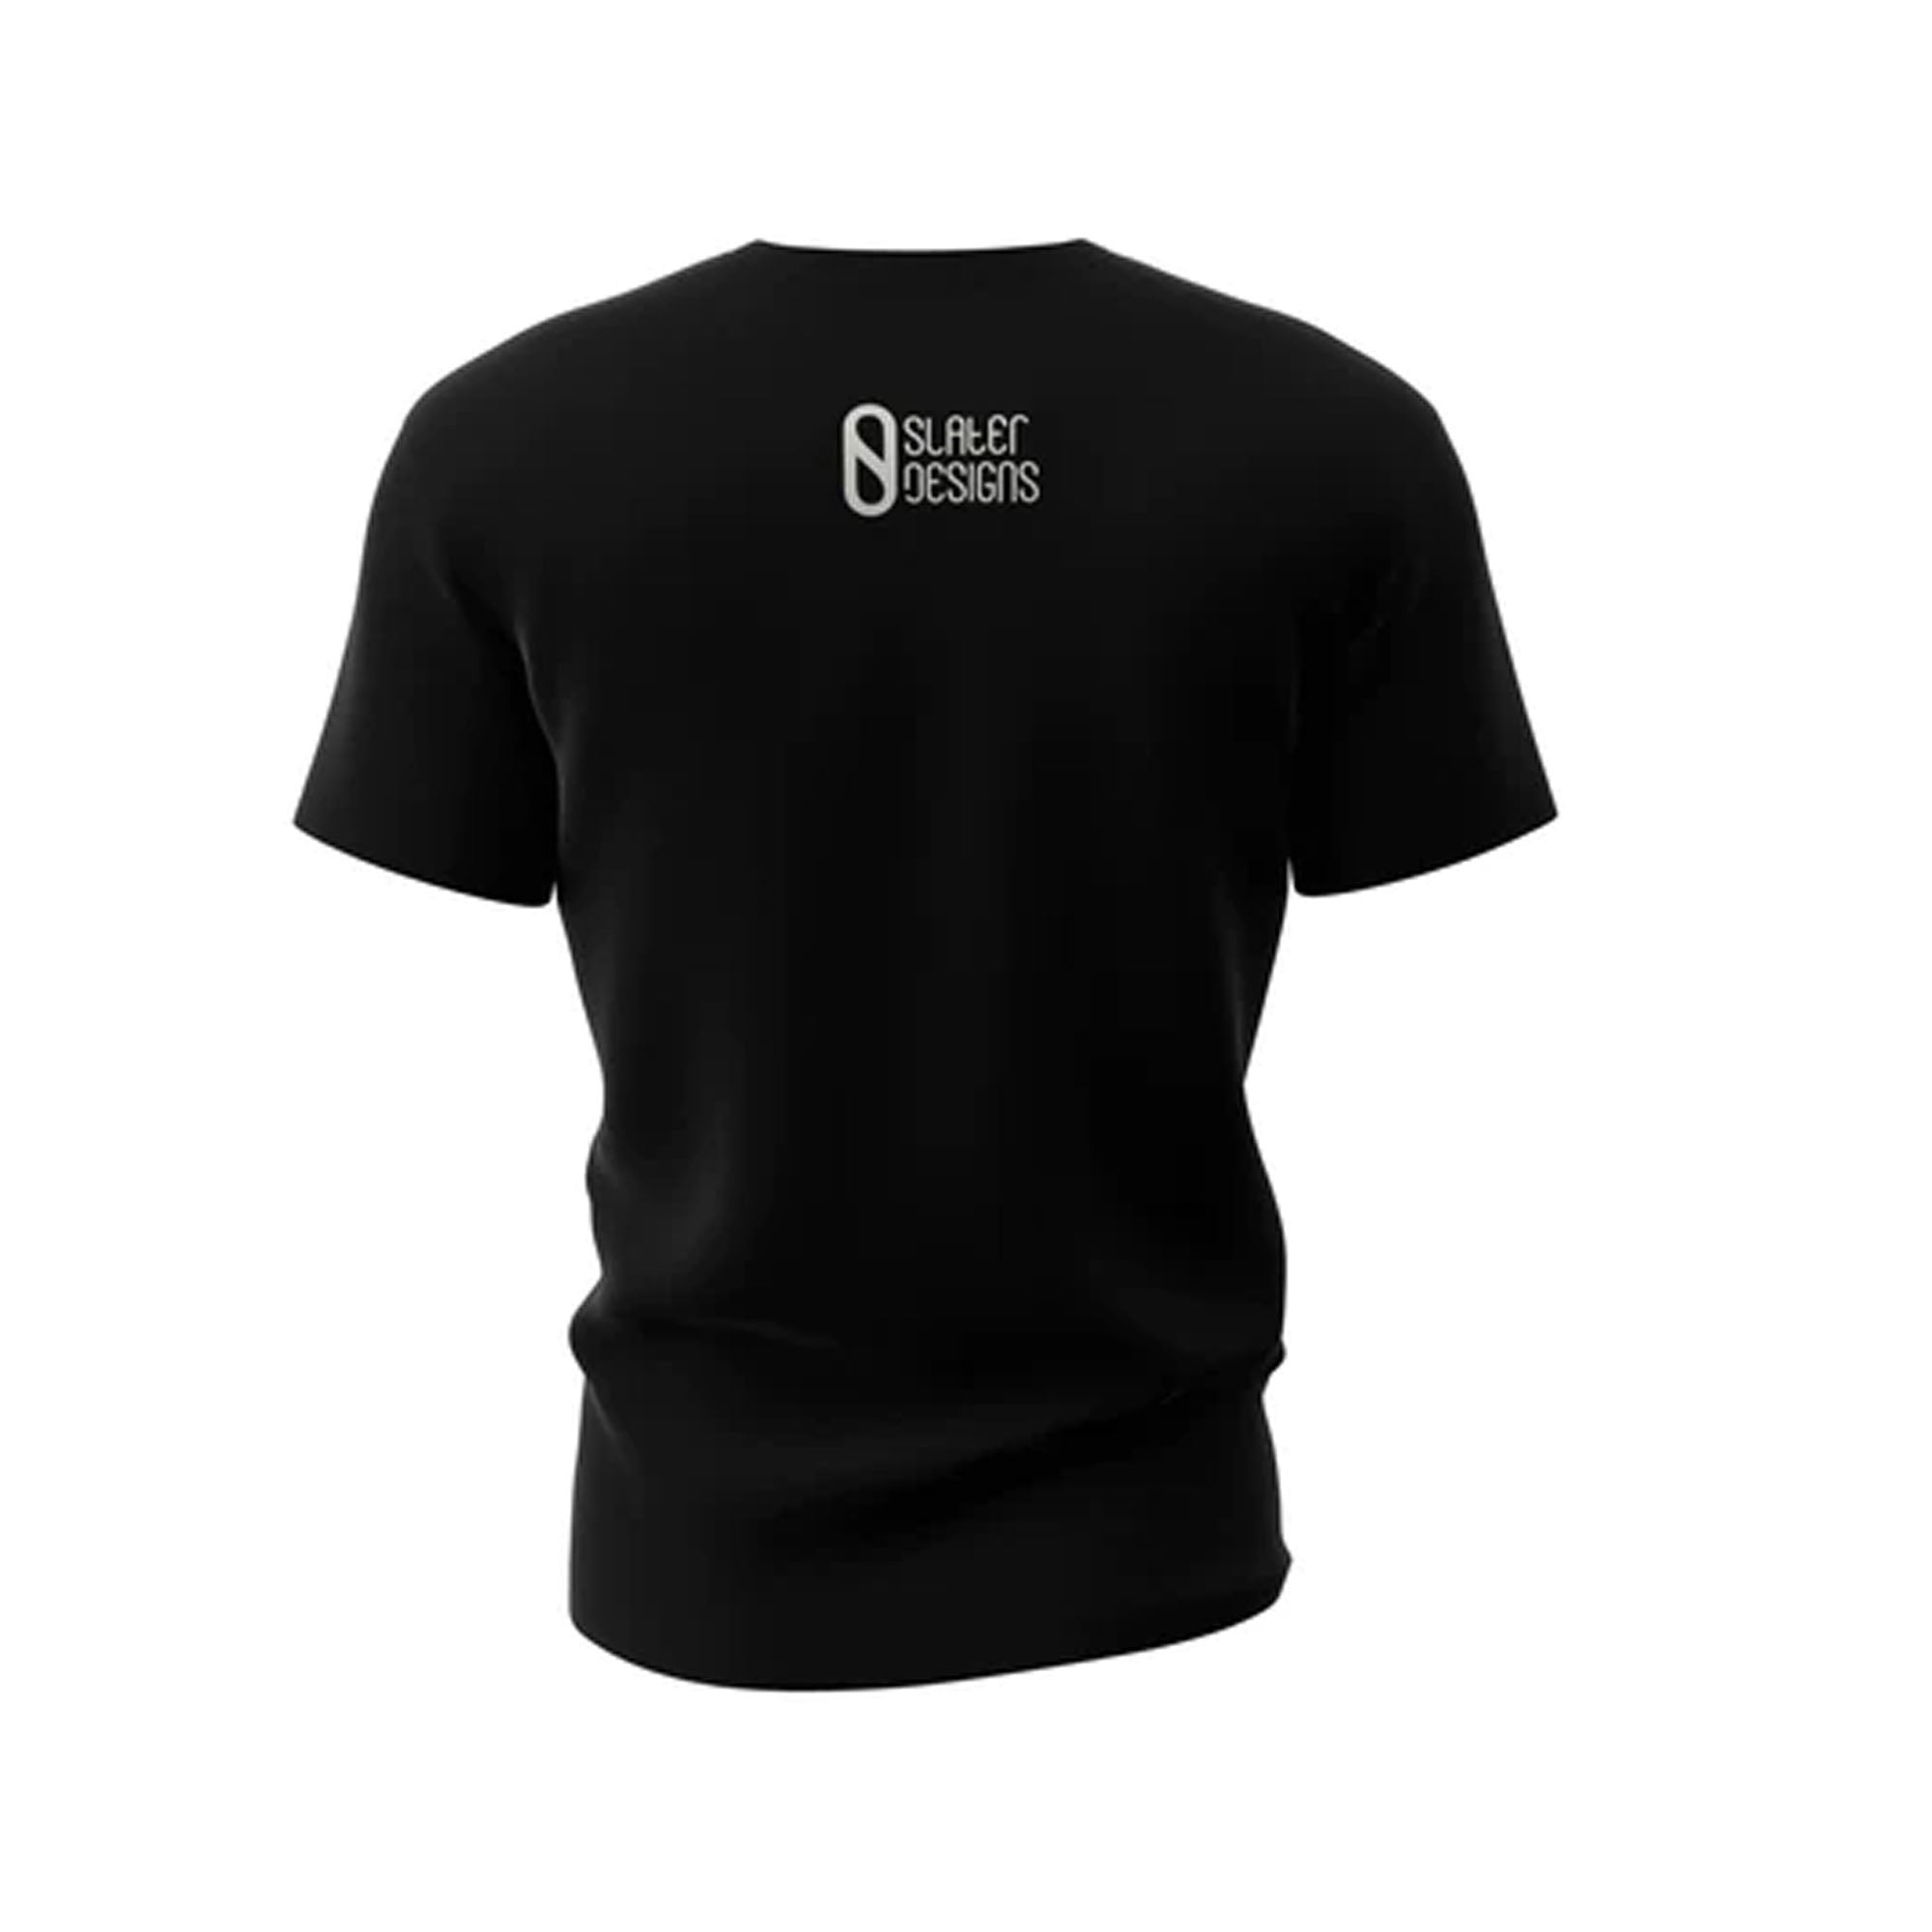 Firewire Slater Designs Back Side Men's S/S T-Shirt